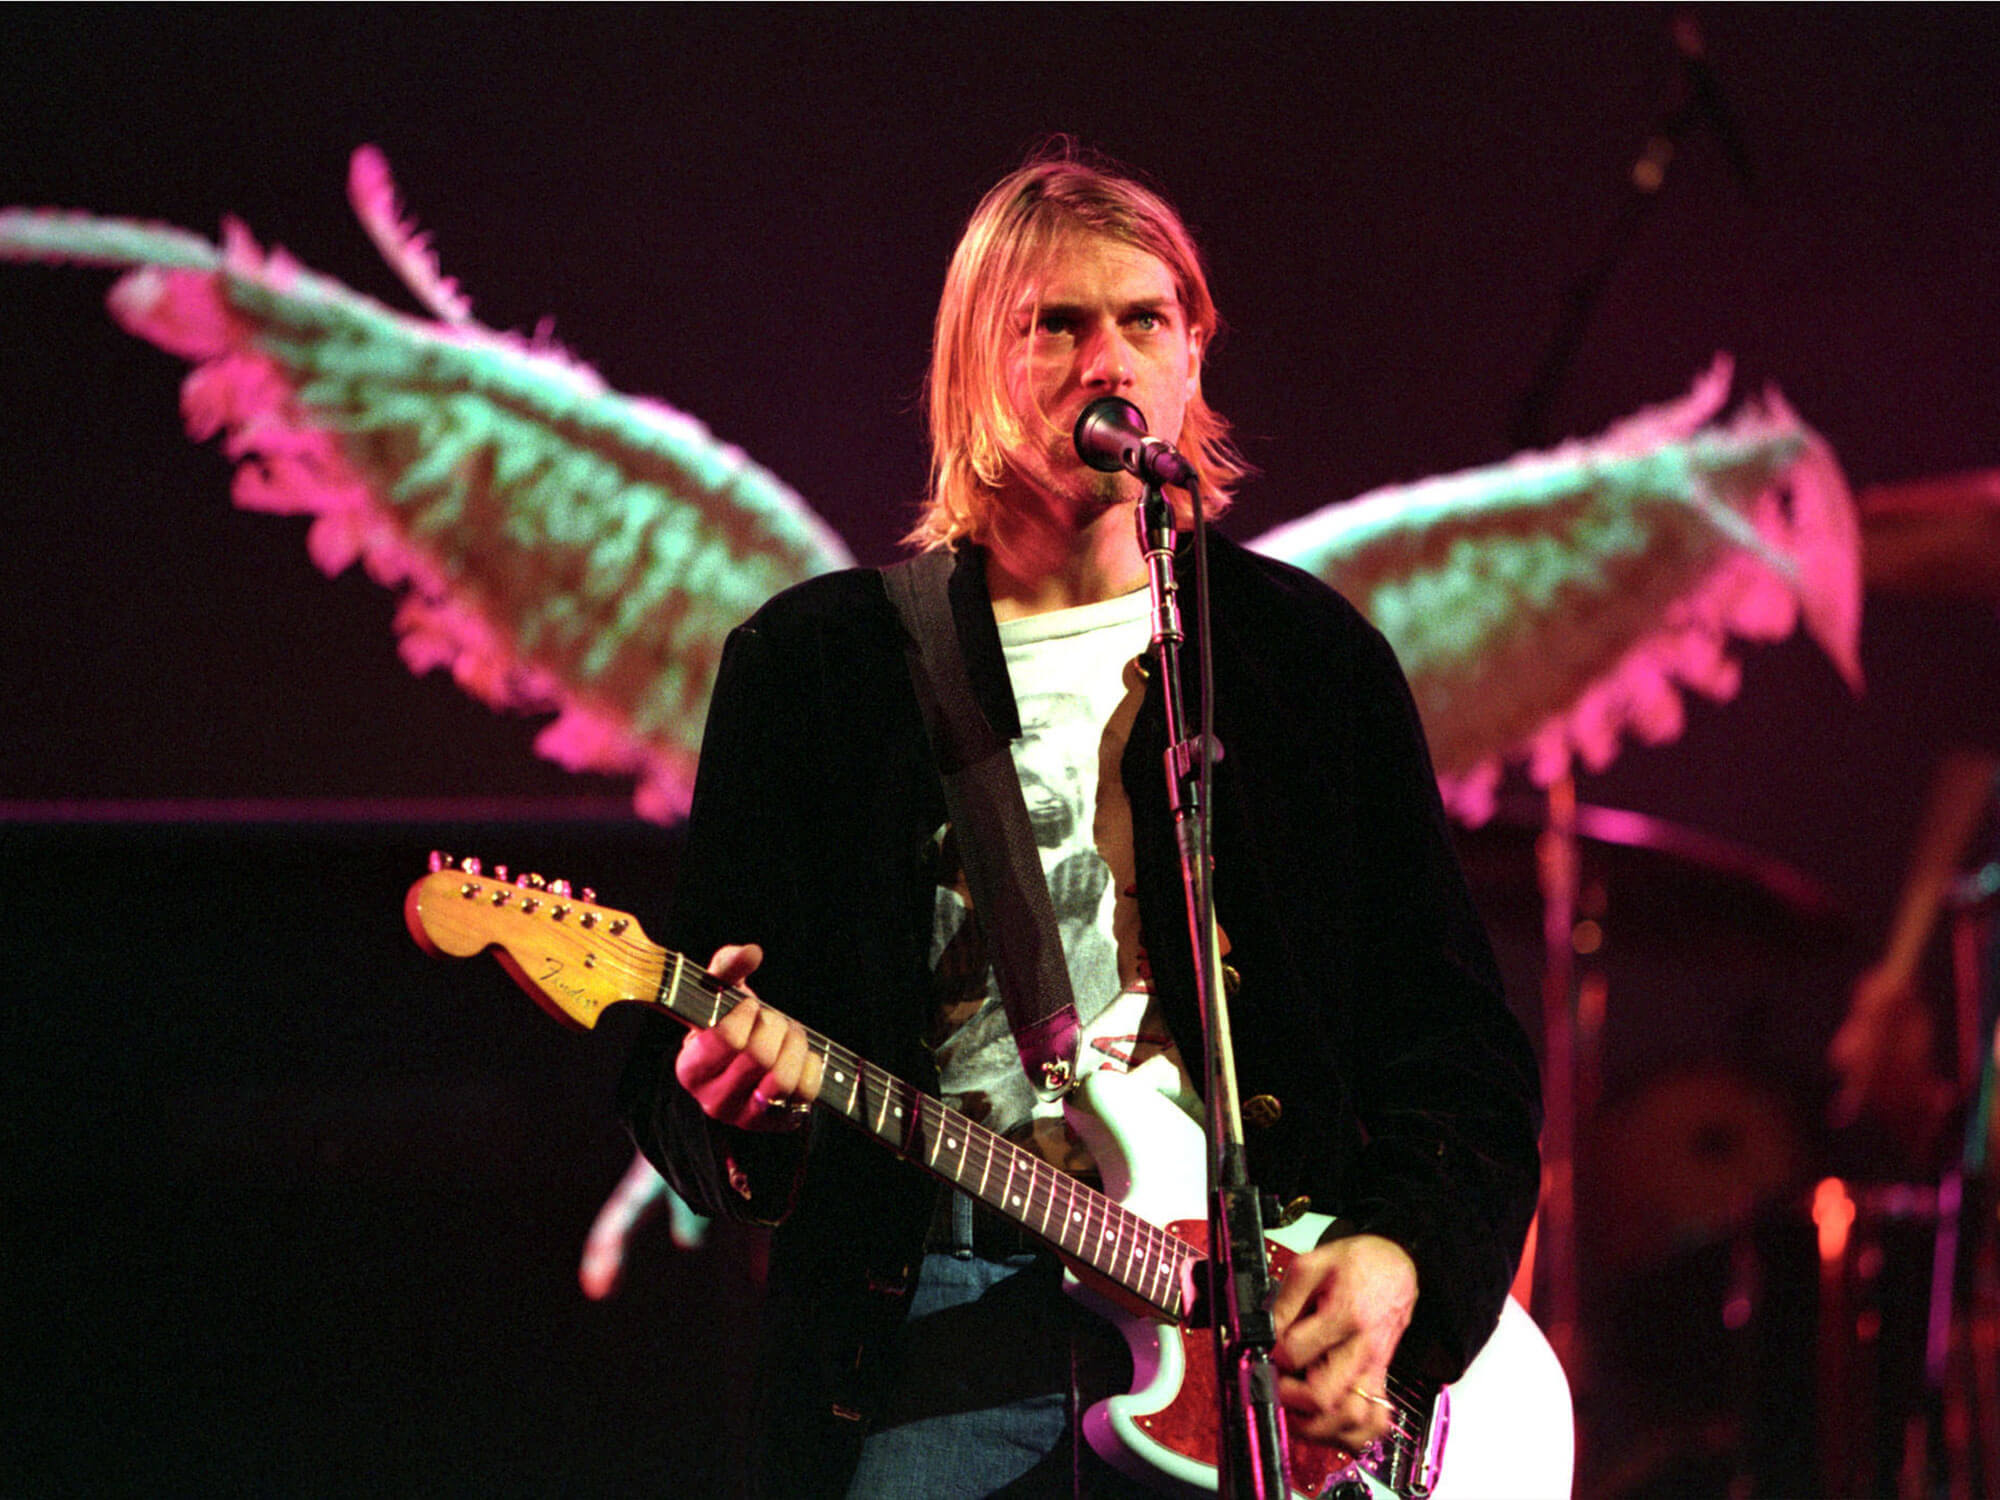 Kurt Cobain performing live